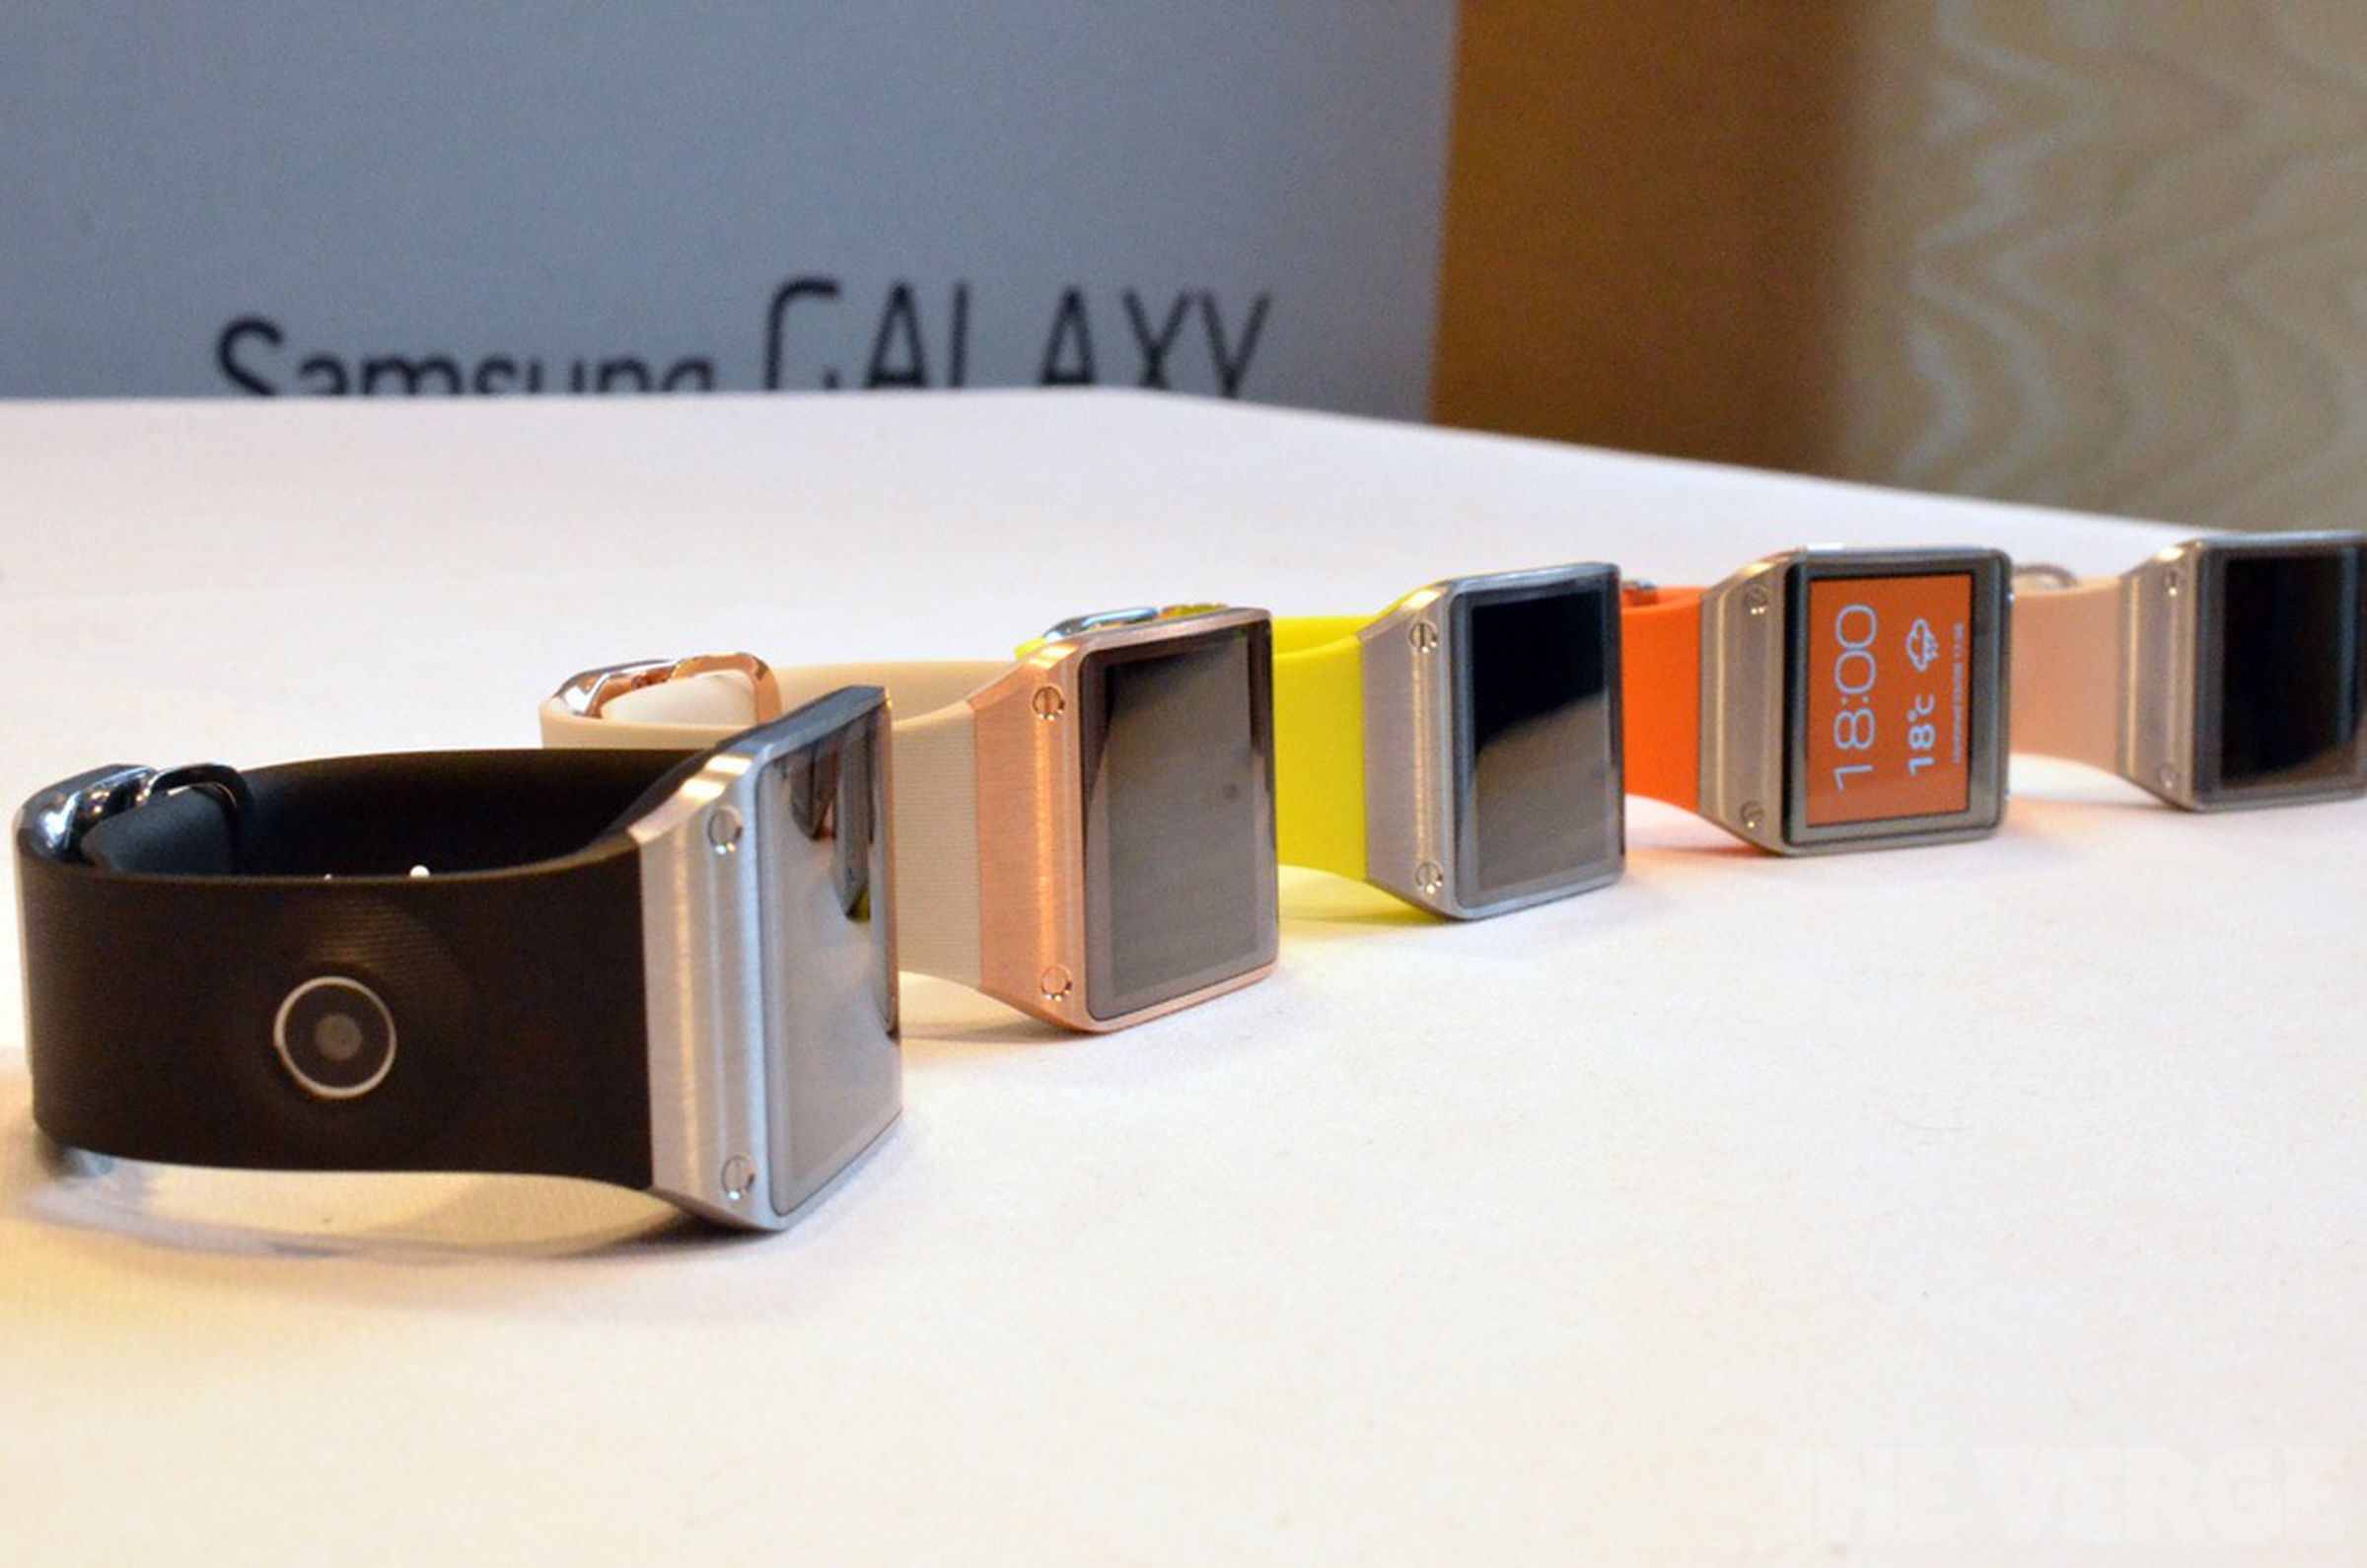 Samsung Galaxy Gear hands-on gallery